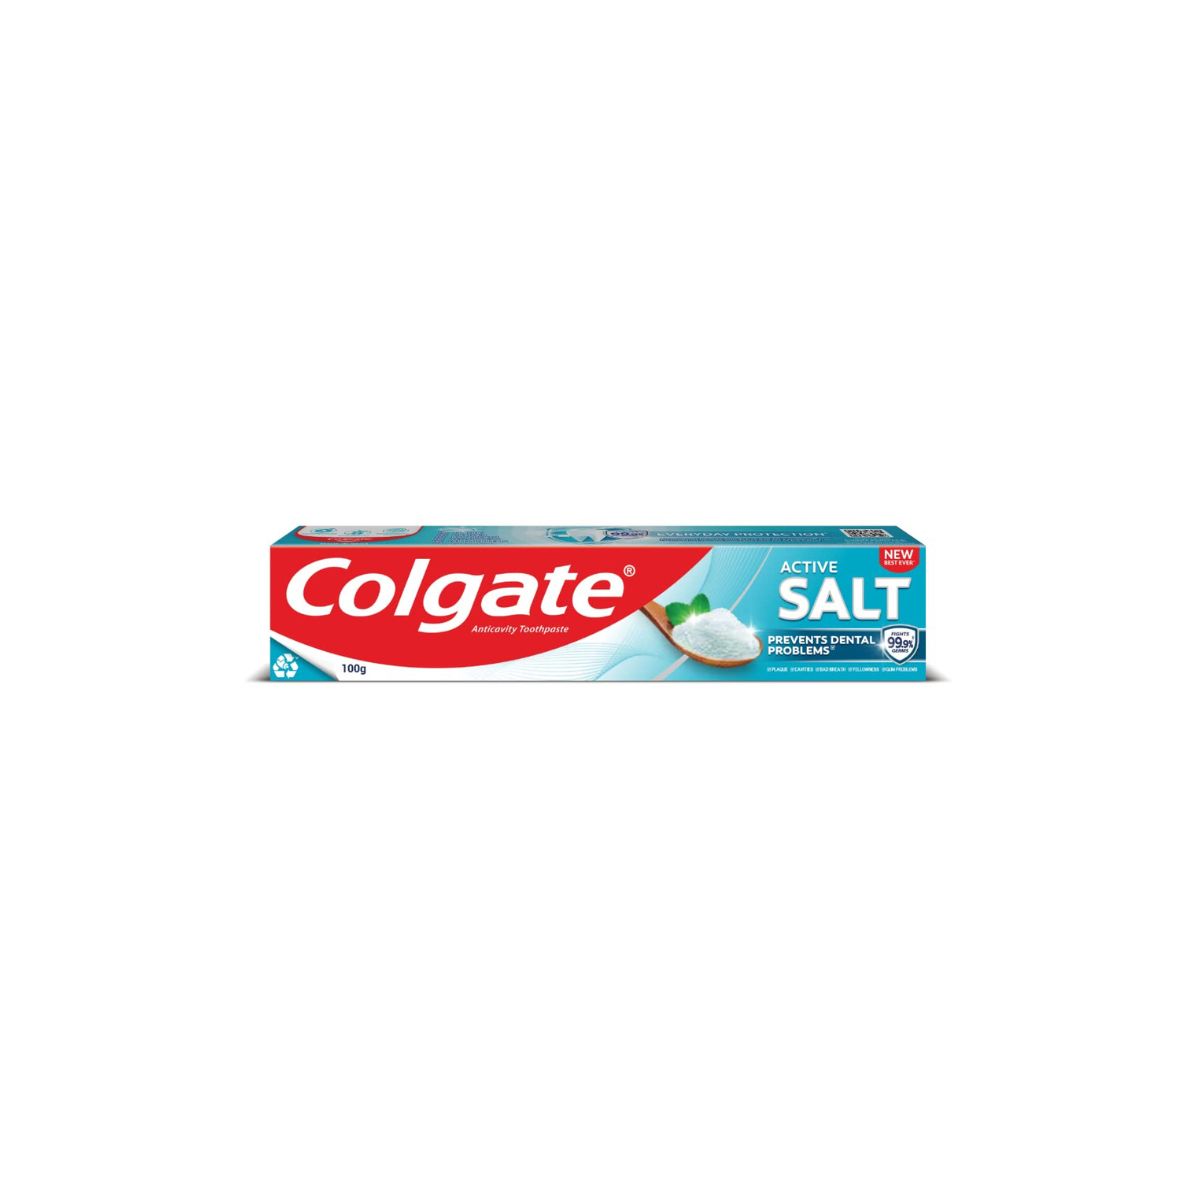 Colgate Anticavity Toothpaste - Active Salt - Prevents Dental Problems - 50g